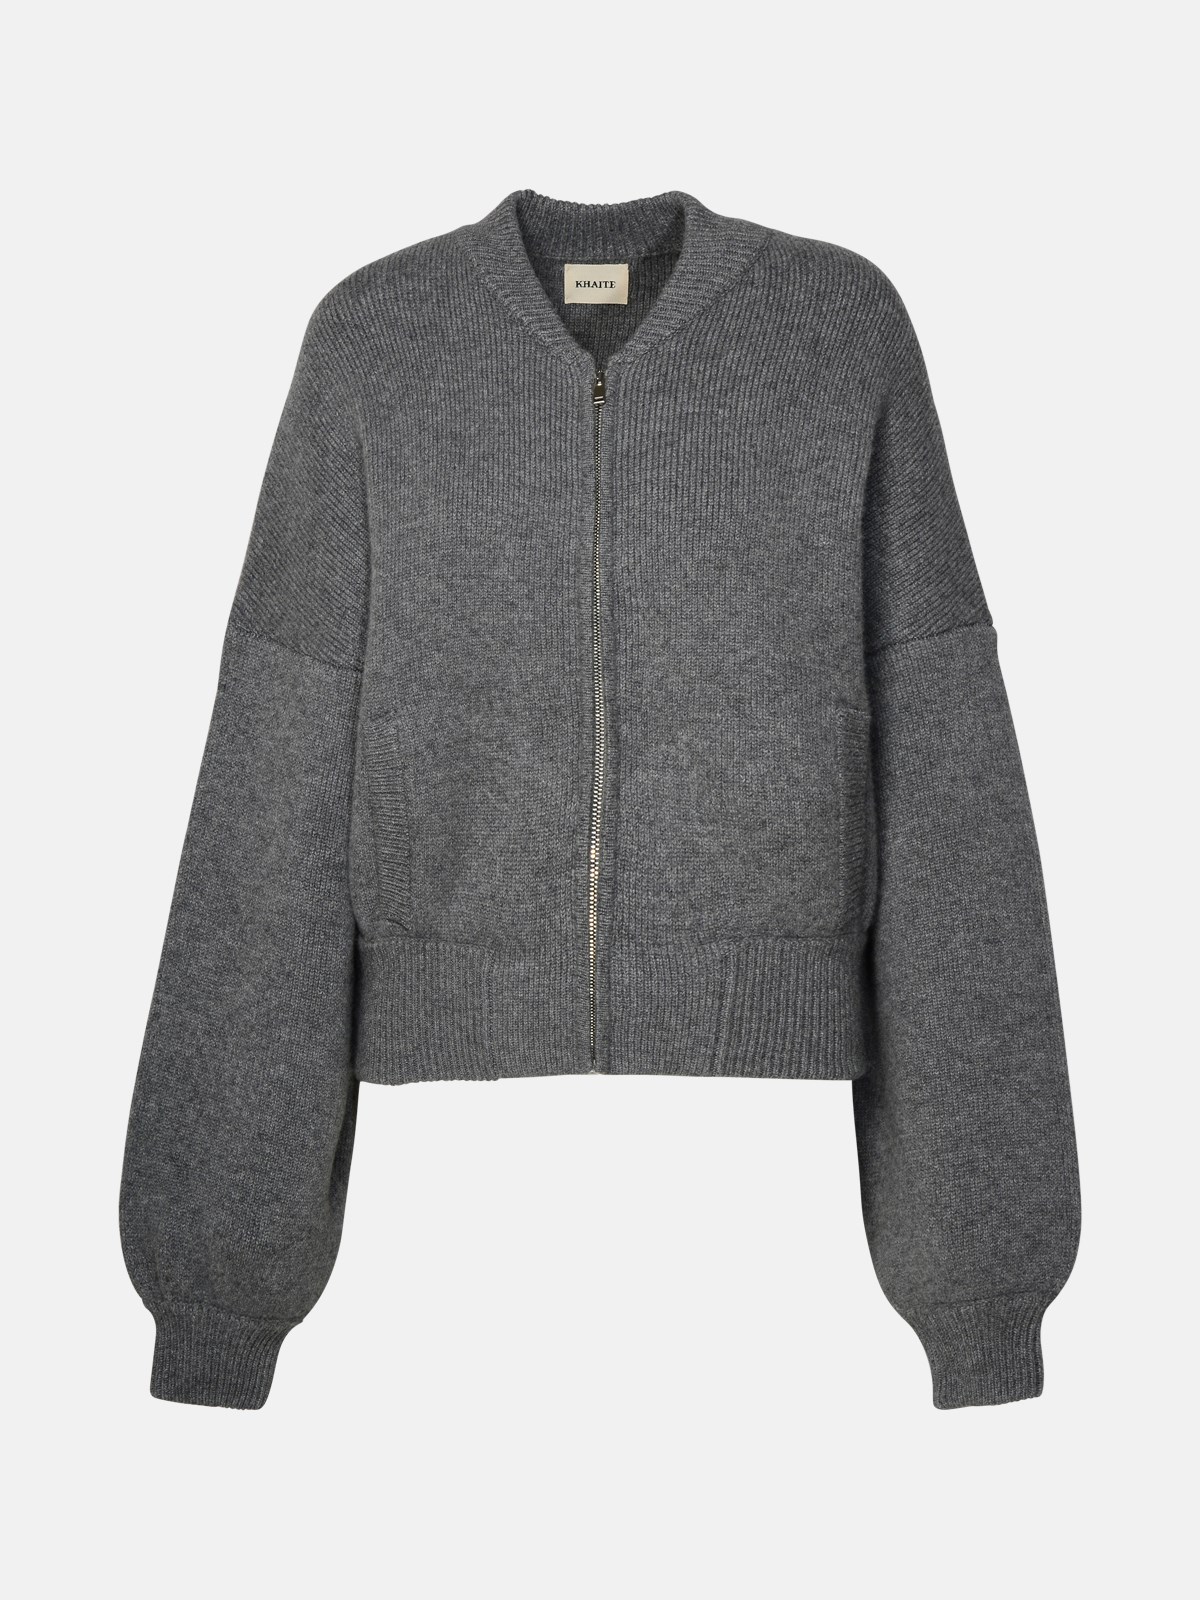 Shop Khaite Grey Cashmere Sweatshirt